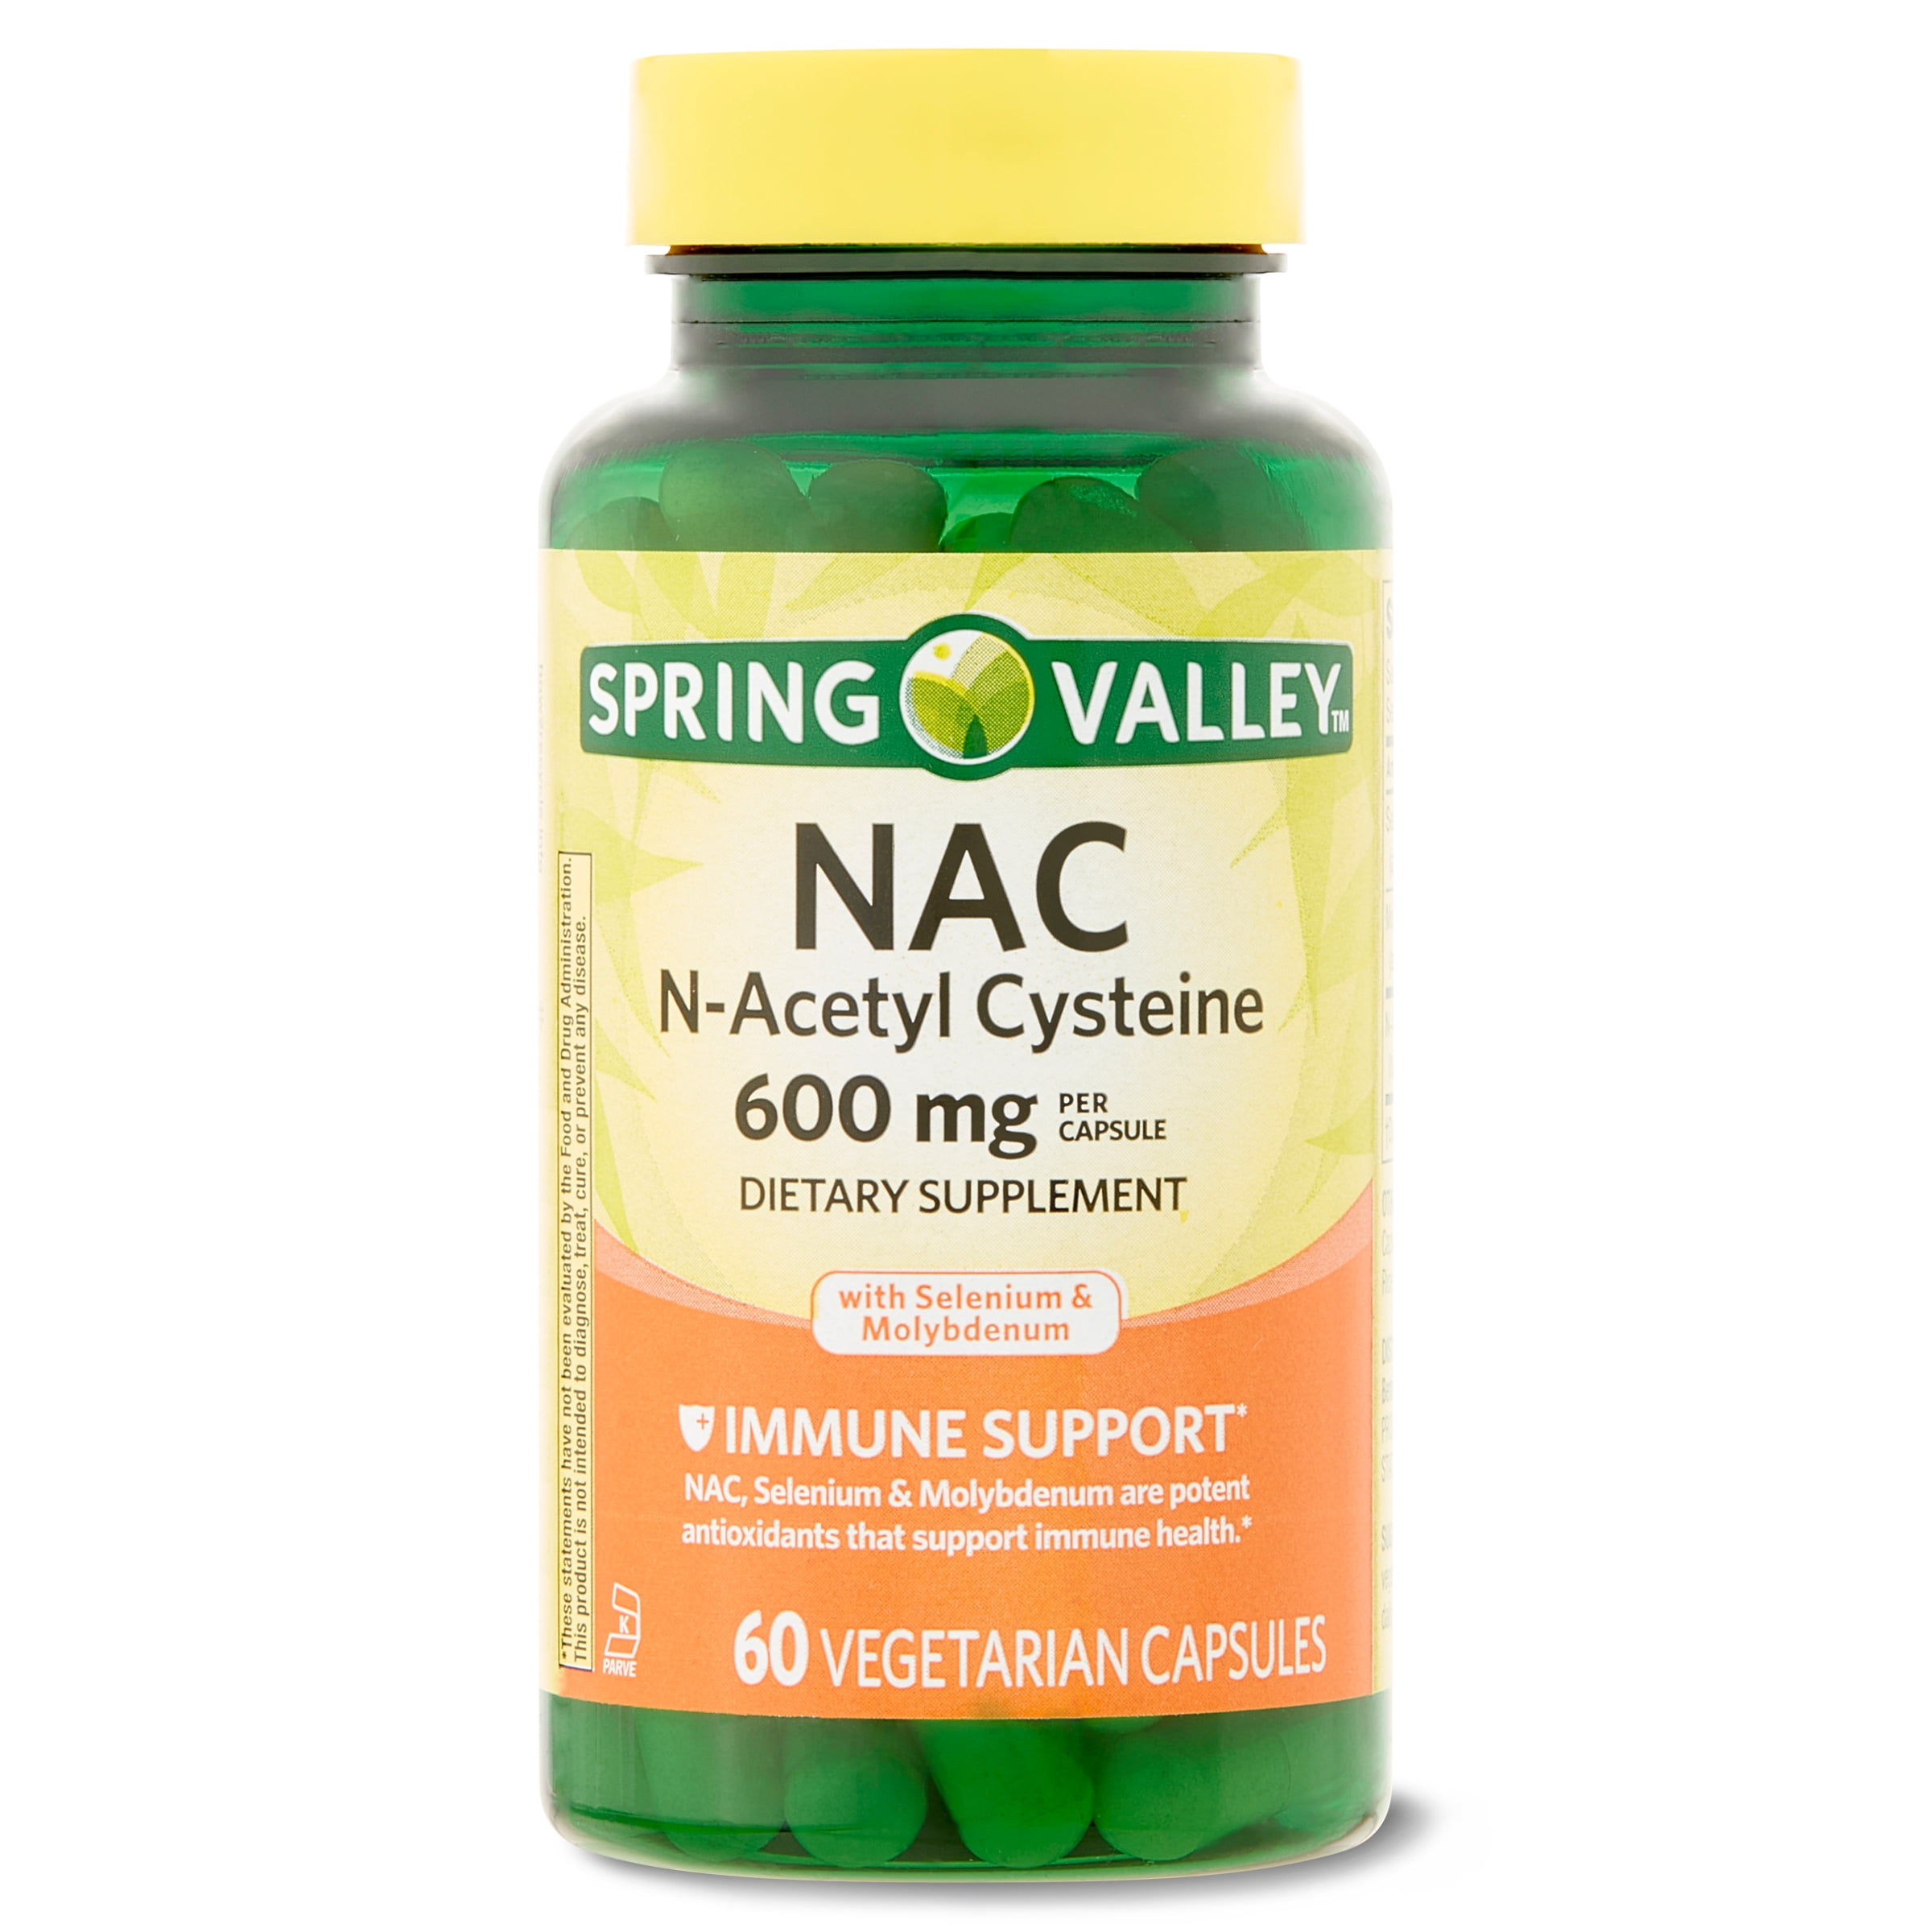 Spring Valley NAC with Selenium & Molybdenum, Vegetarian Capsules, 60 Count